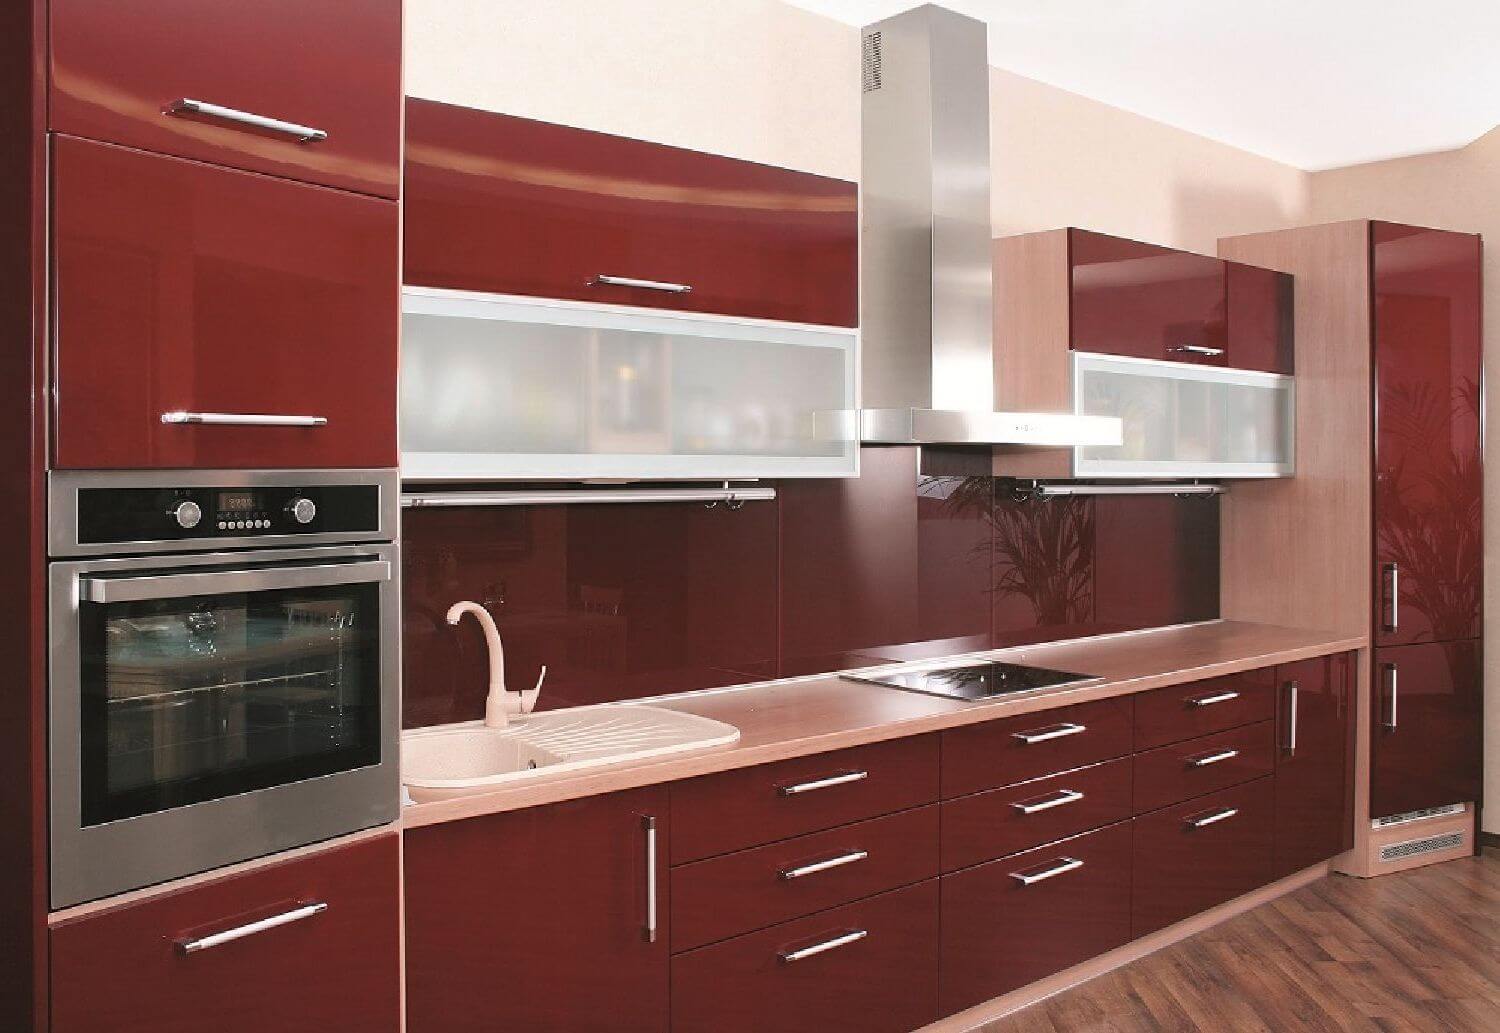 Impressive kitchen cabinet color 